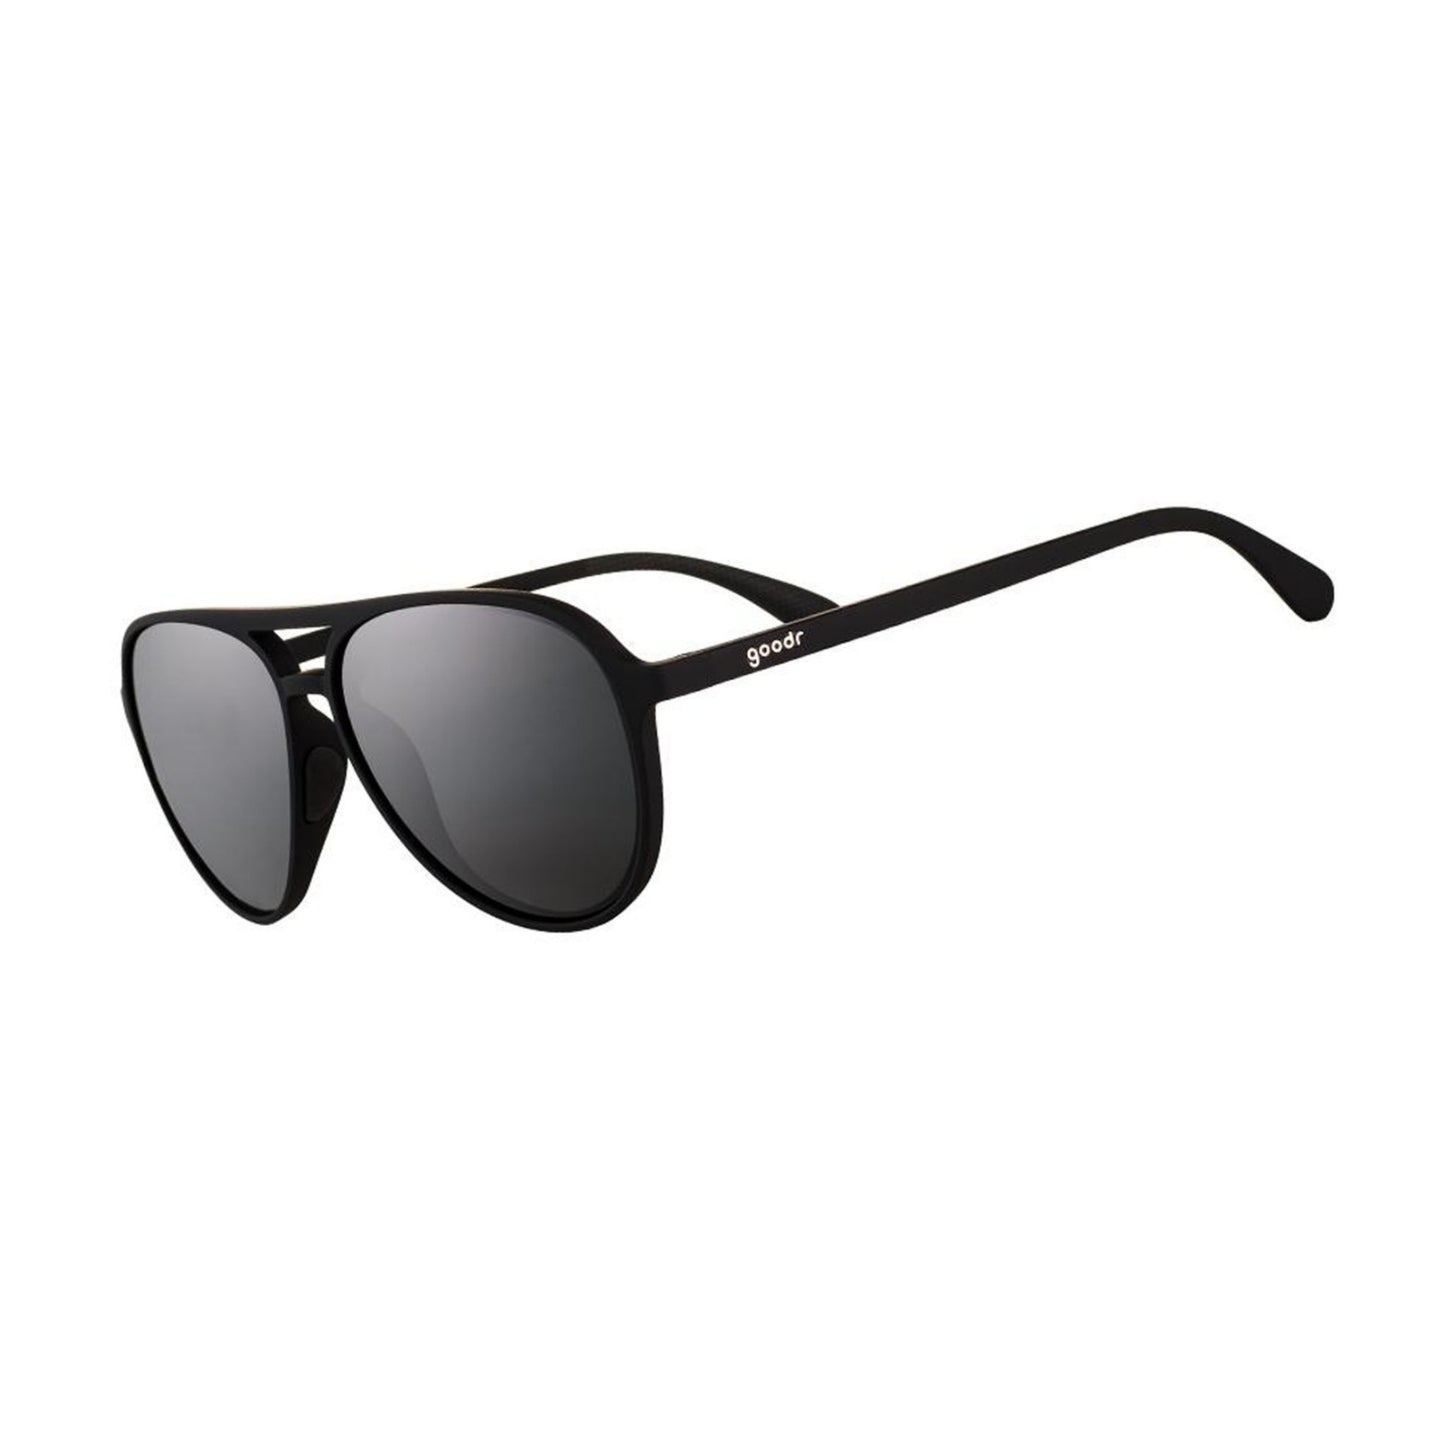 GOODR Falkor's Fever Dream Sunglasses – Box Basics